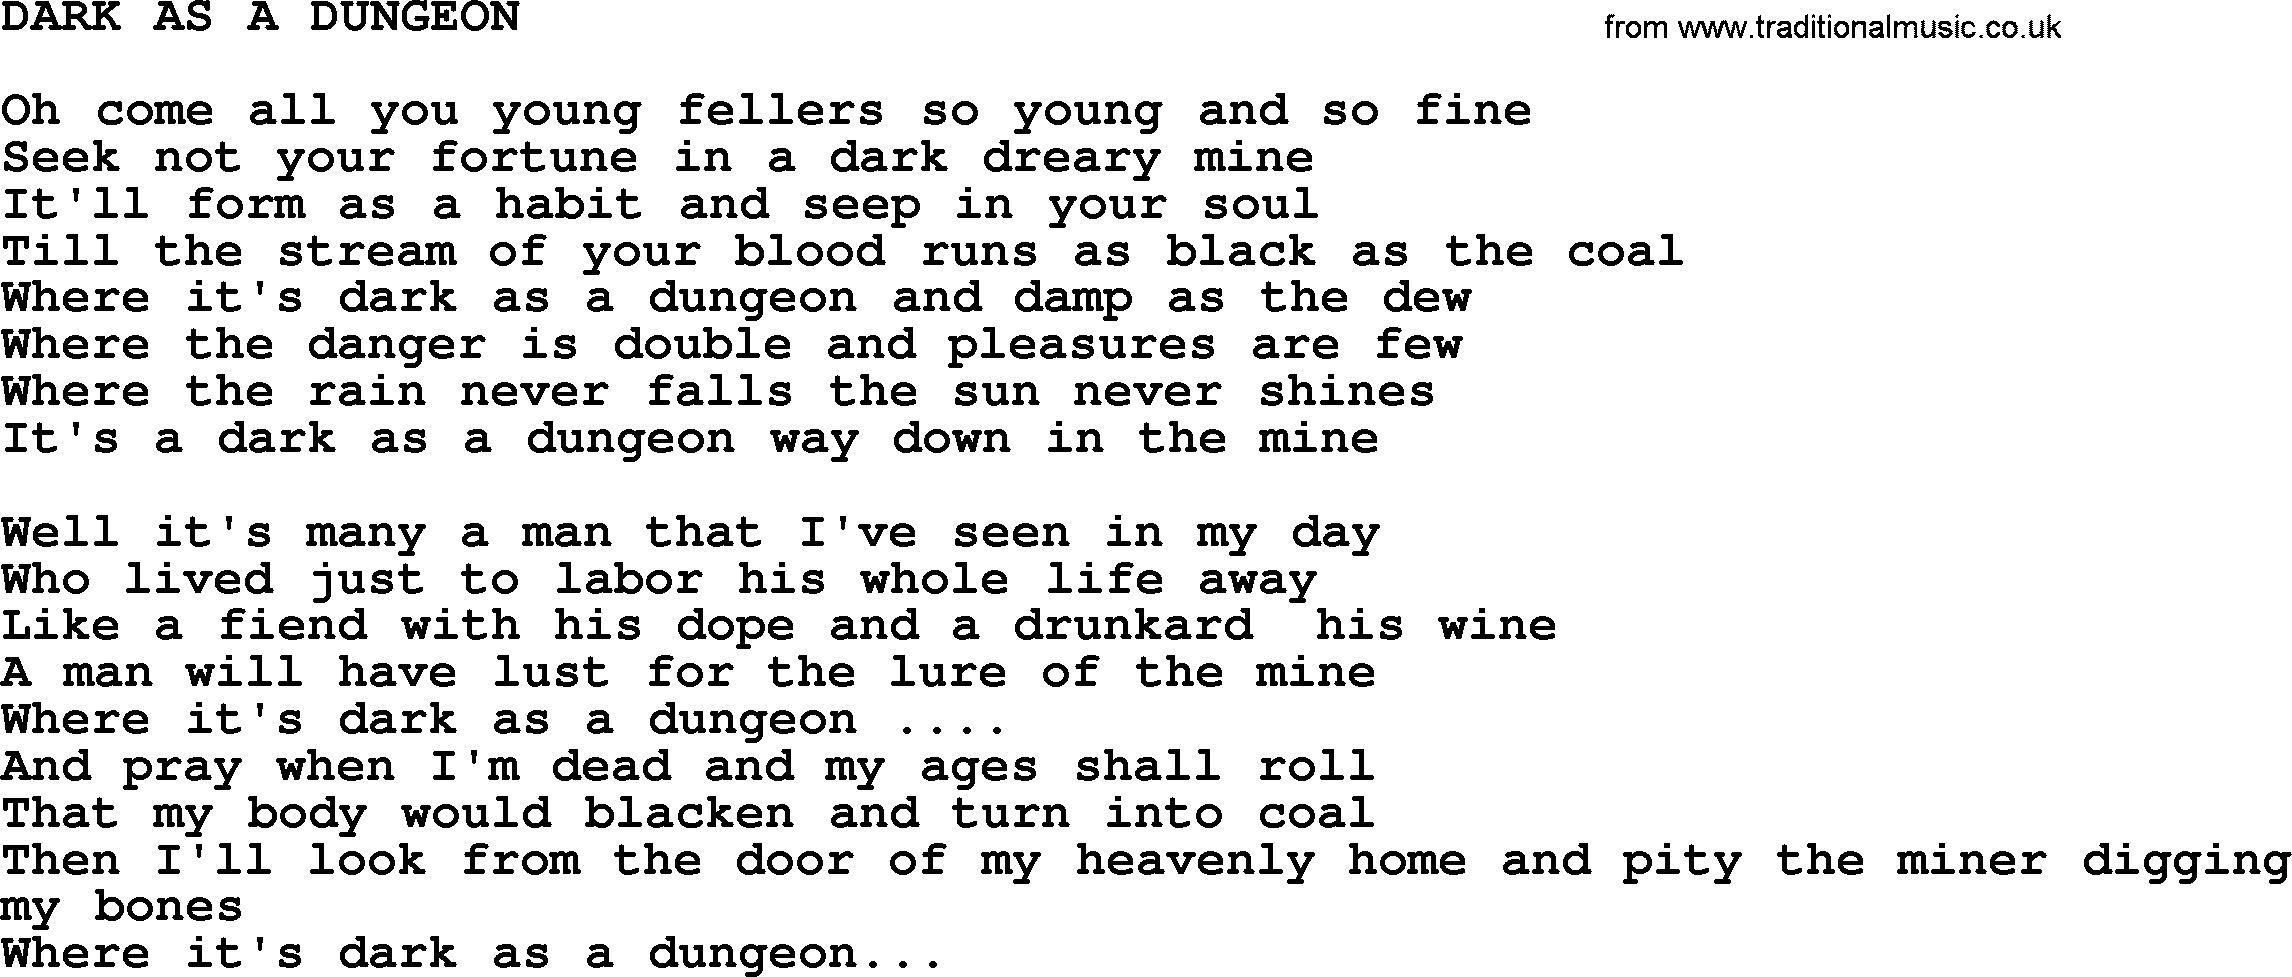 Johnny Cash song Dark As A Dungeon.txt lyrics